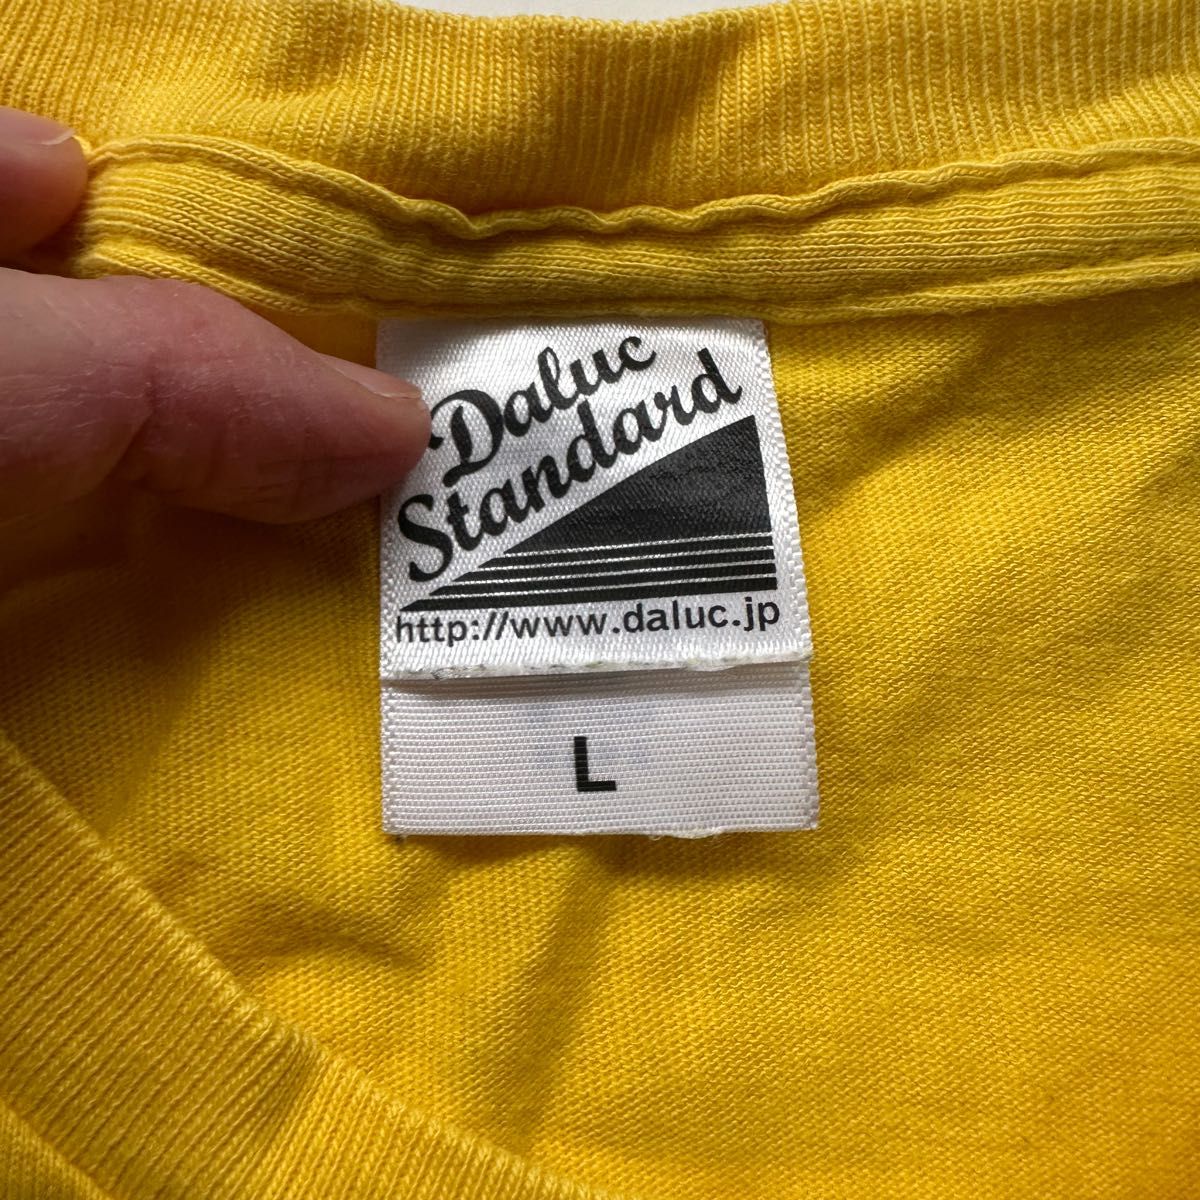 TOMS メンズ 半袖 シャツ Tシャツ トムス セット オレンジ 黄色 イエロー インナー ジュニア 無地 丸首 アンダー 紳士